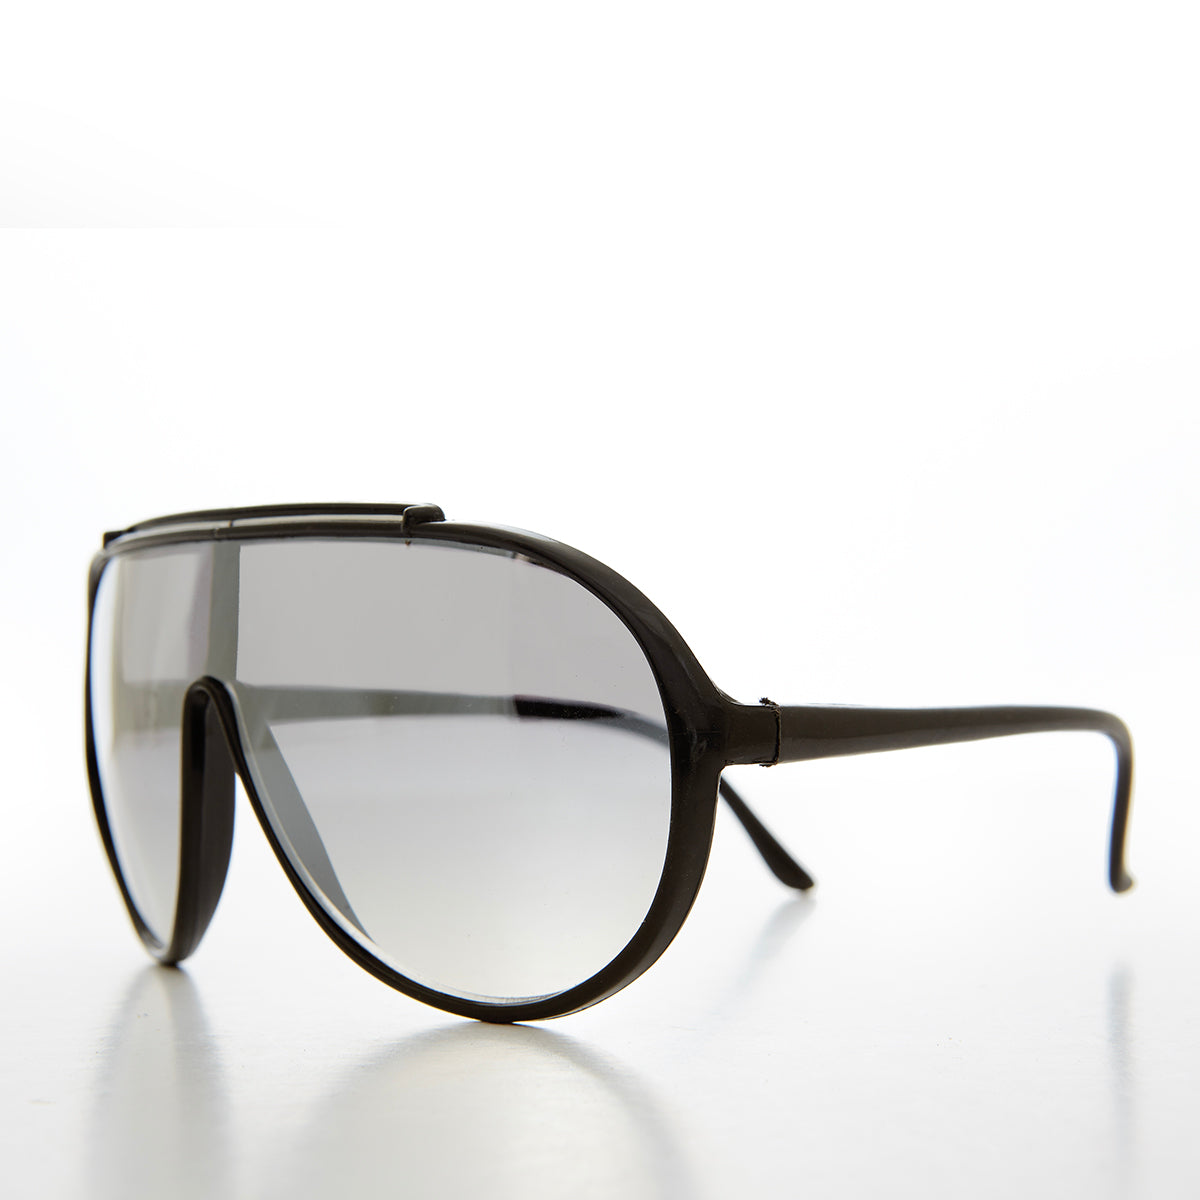 Sunglass Museum Large 80s Vintage Pilot Sunglasses - Slider - Black